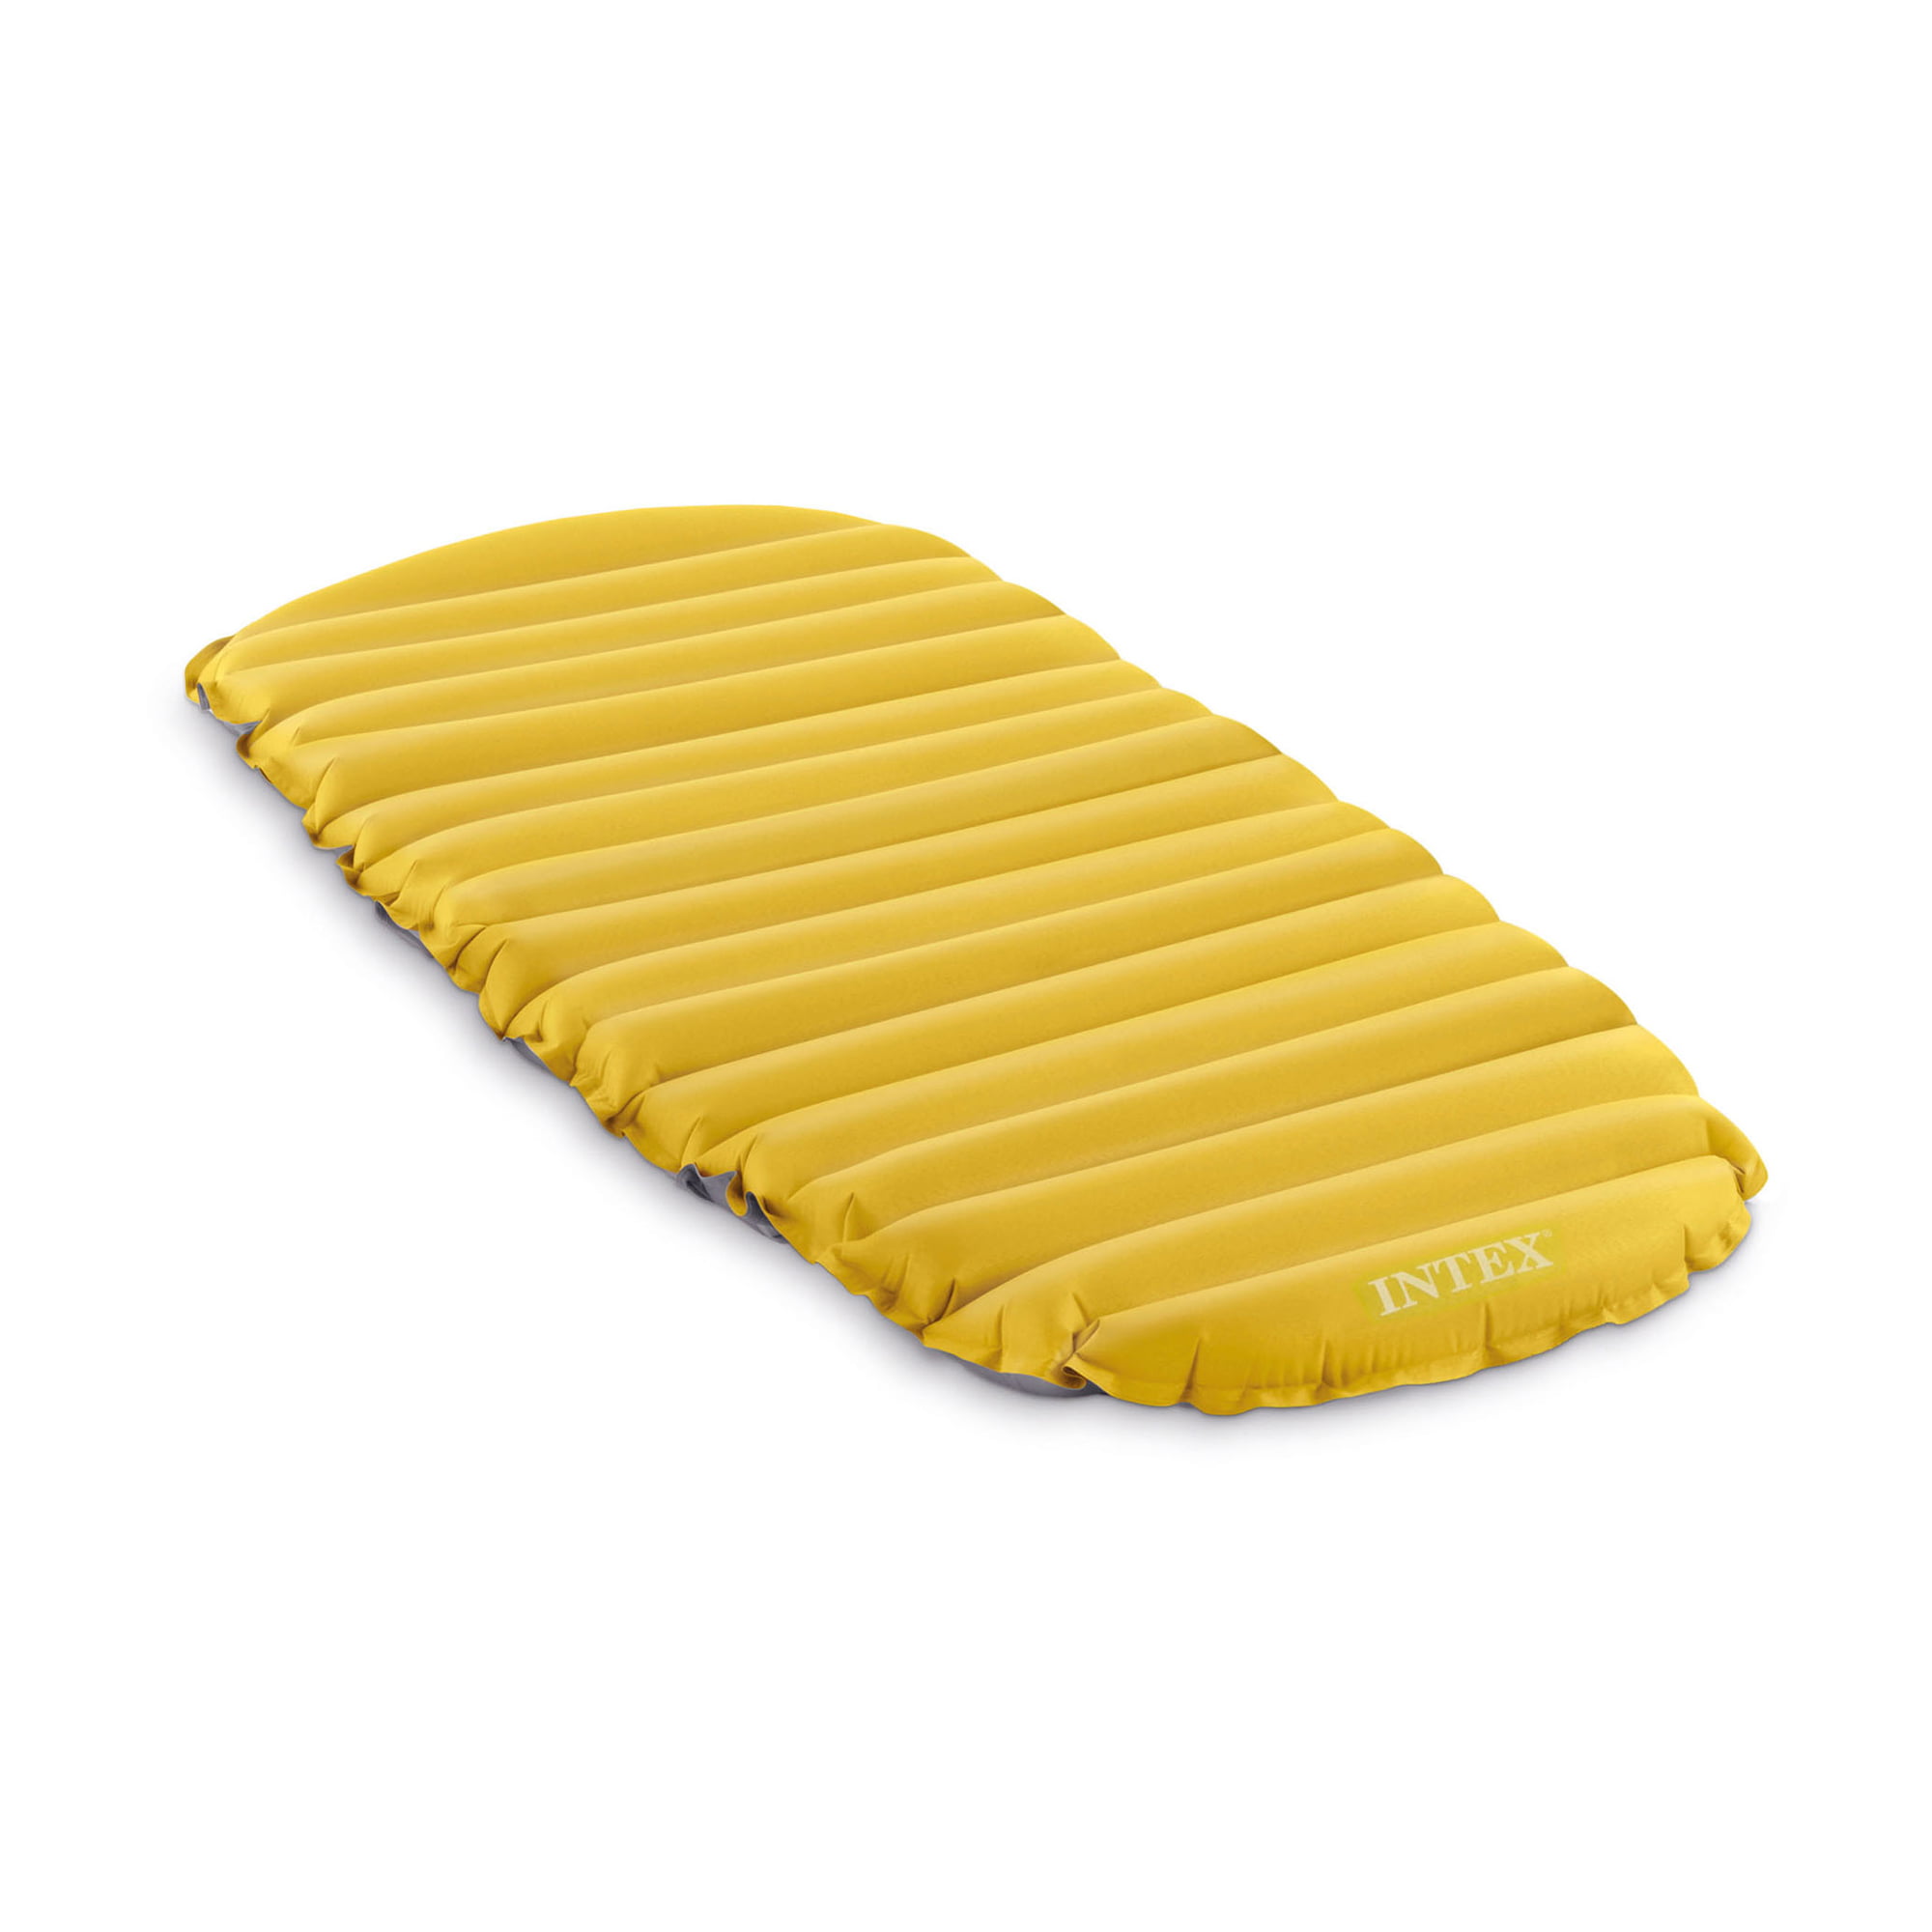 Intex Cot Size Inflatable Camping Tent Sleeping Mattress Pad Open Box Yellow 